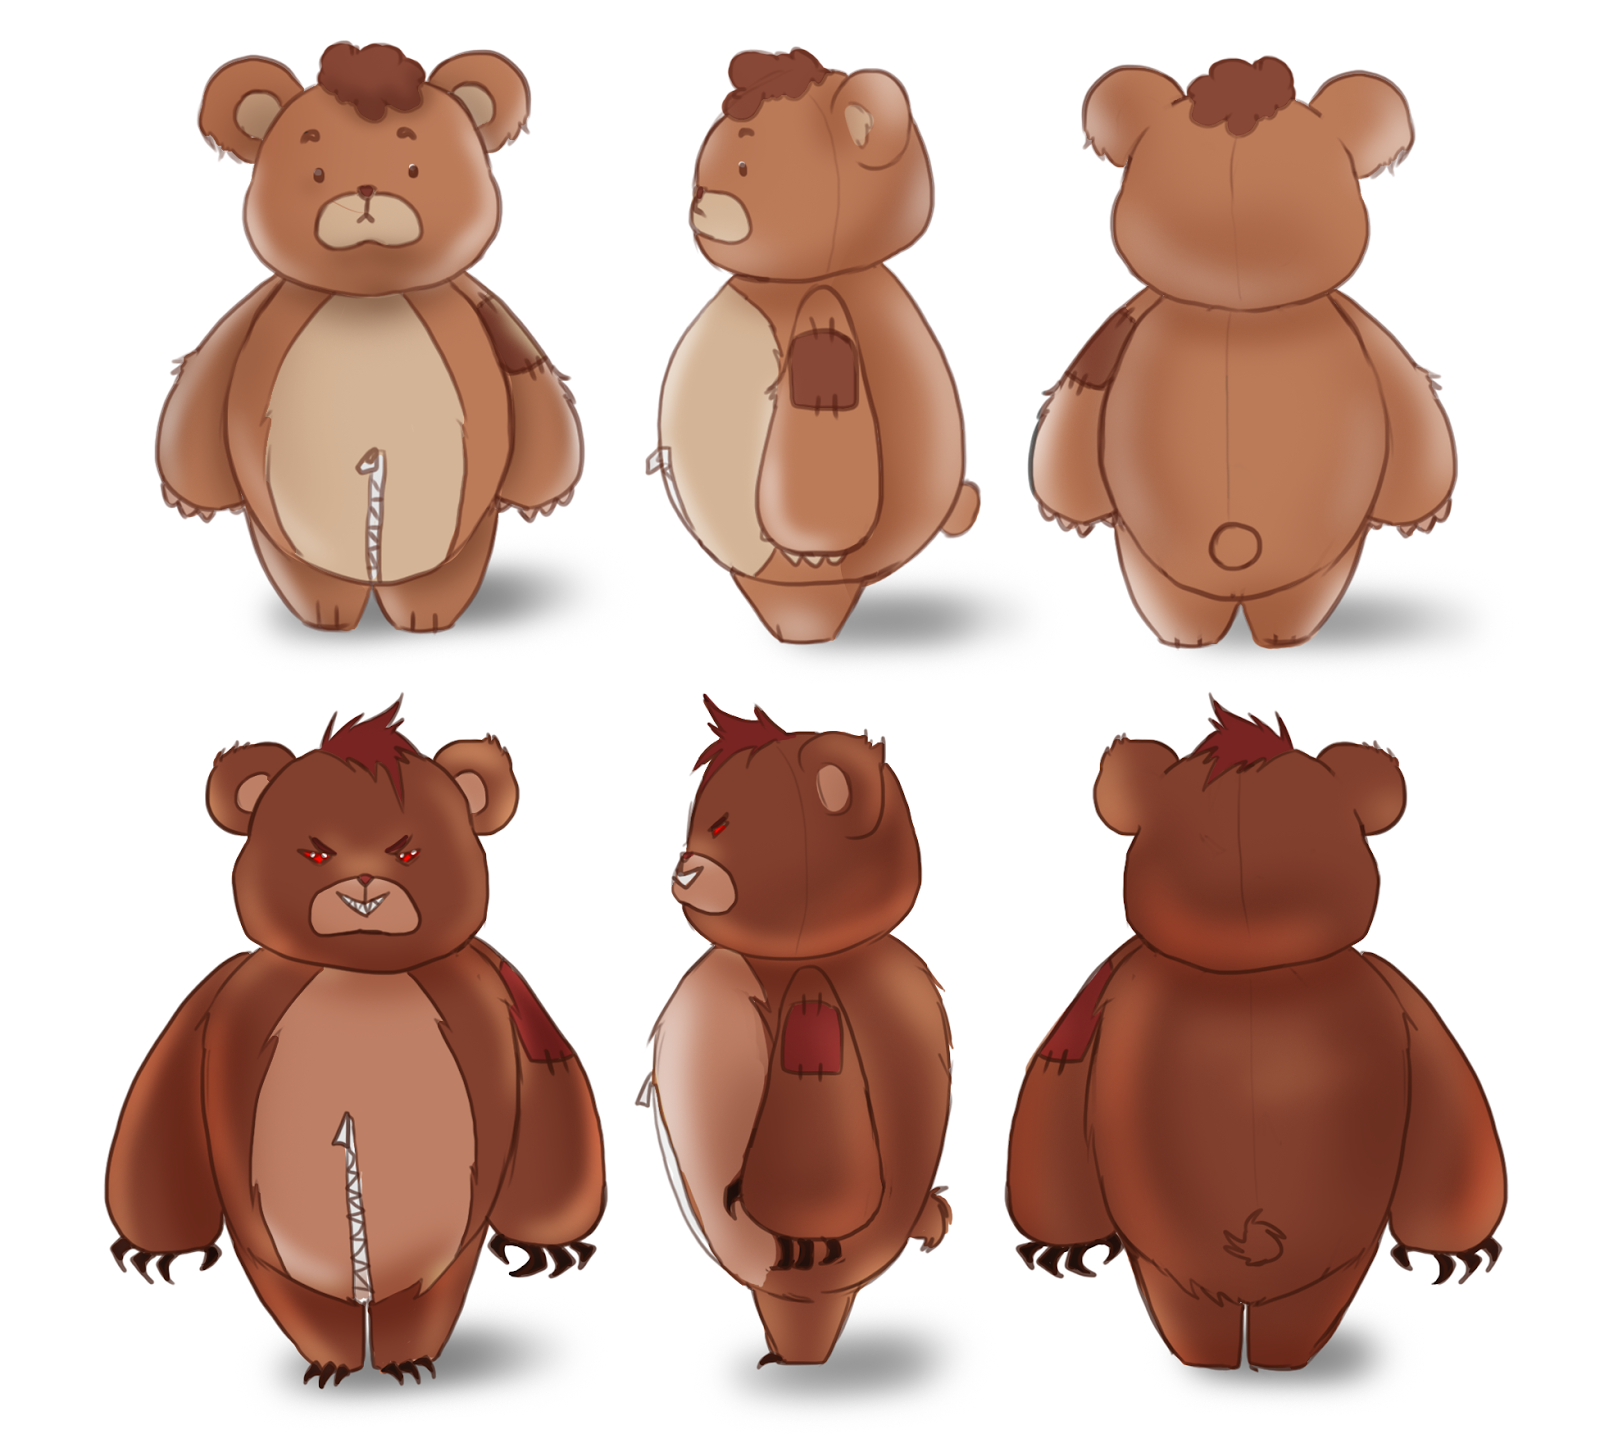 Teddy bear teddy bear turn around. Медведь концепт арт. Медвежонок концепт.